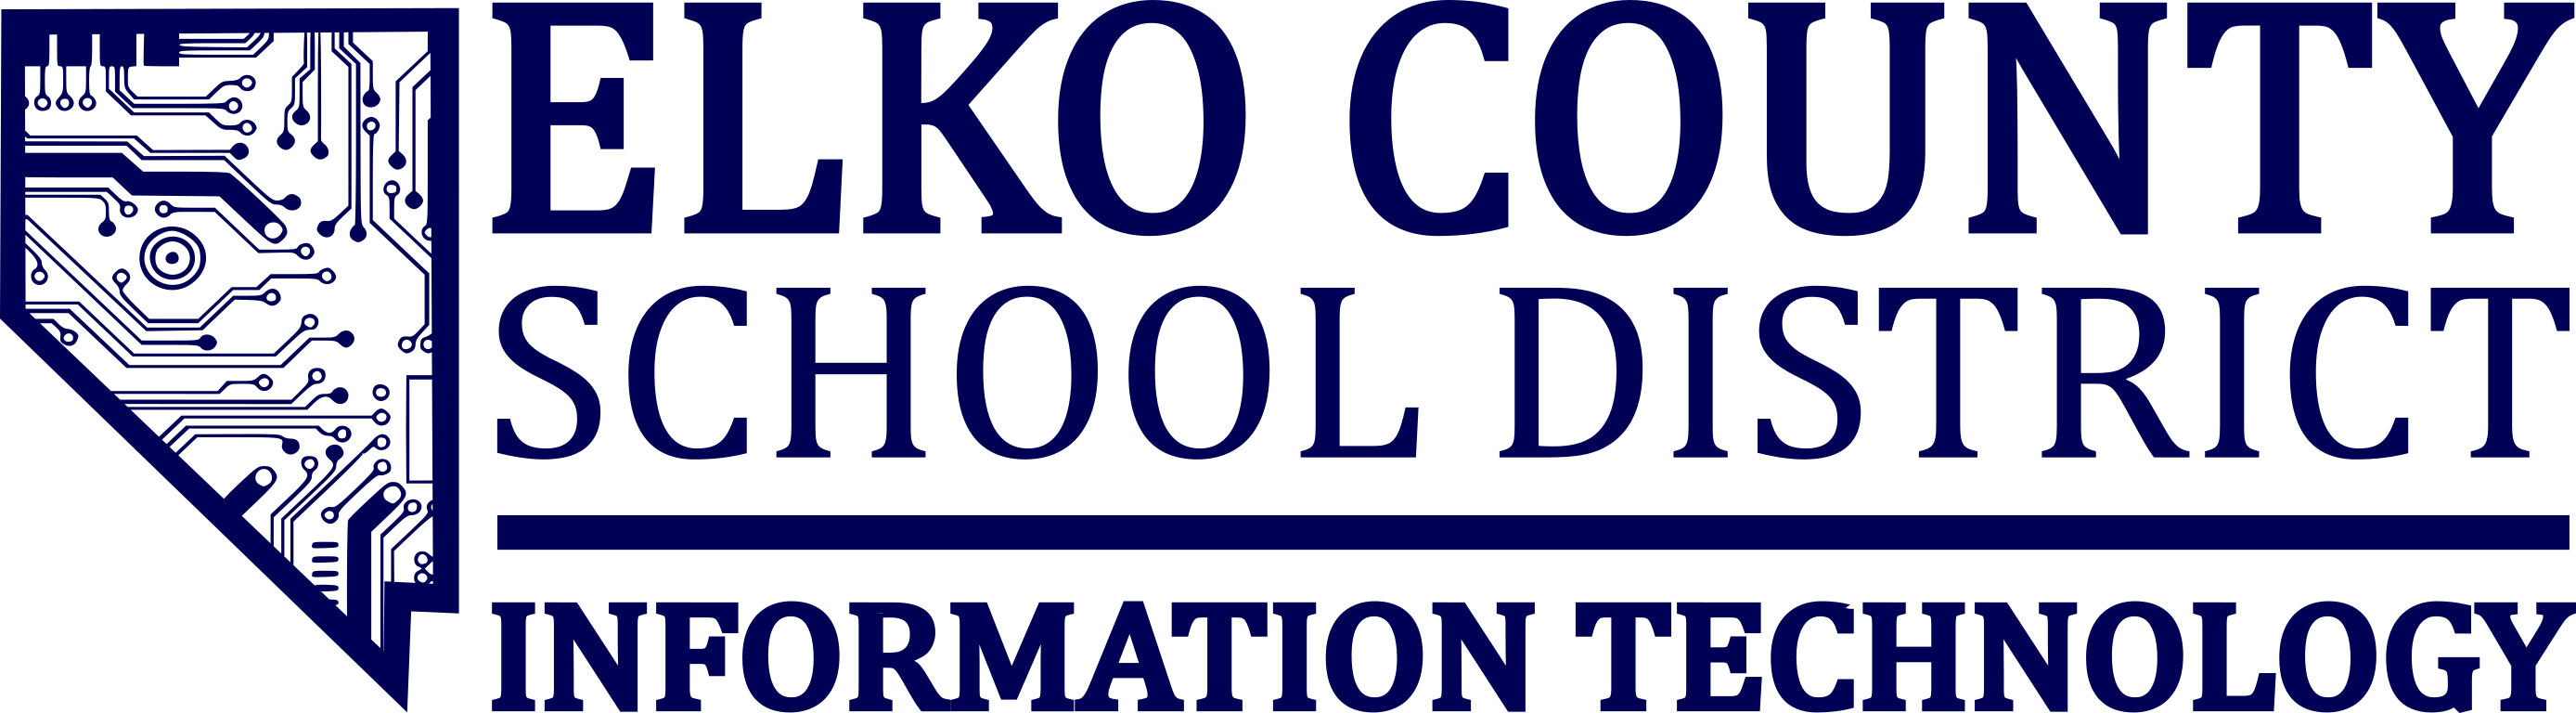 ELKO COUNT SCHOOL DISTRICT INFORMATION TECHNOLOGY